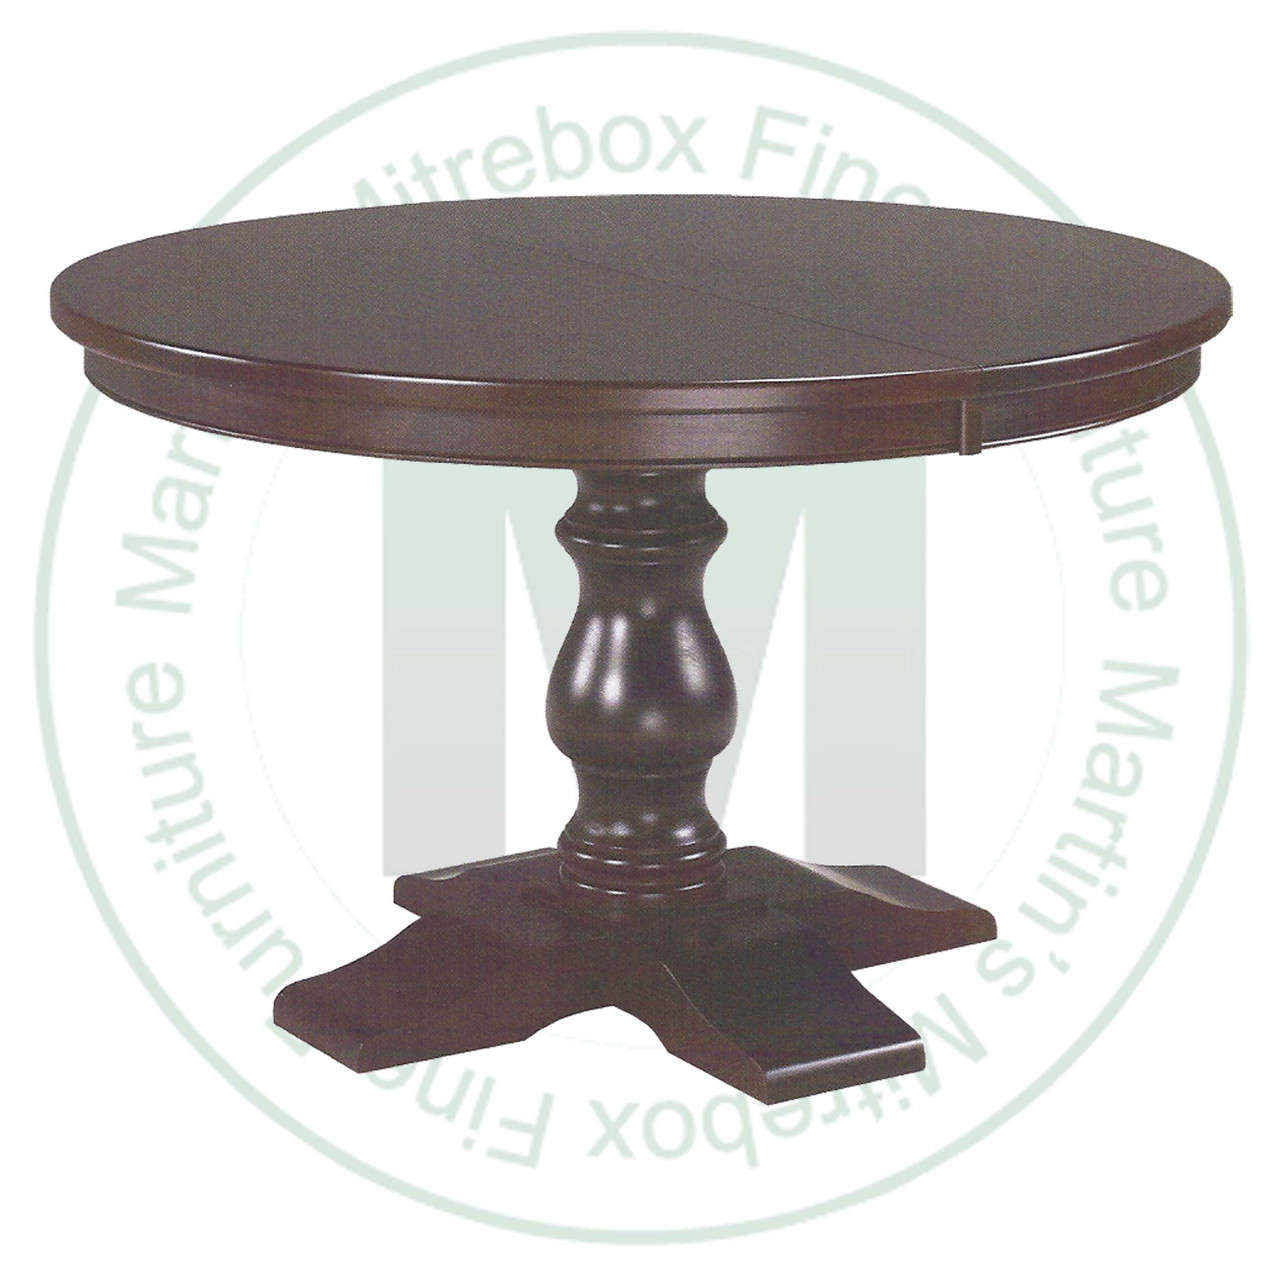 Maple Savannah Single Pedestal Table 60''D x 60''W x 30''H With 1 - 12'' Leaf Table